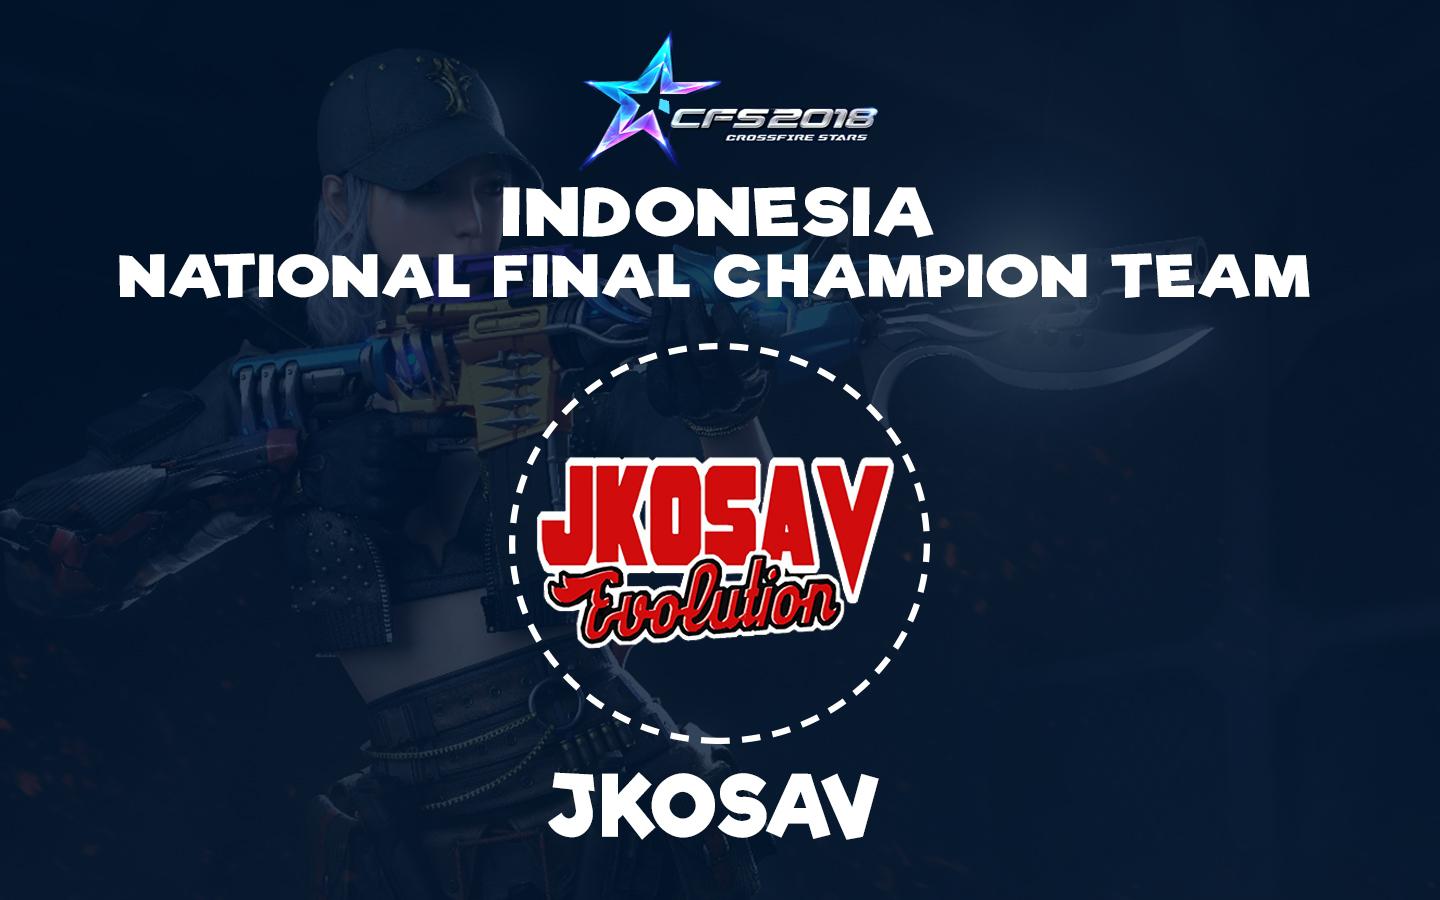 JKOSAV Evolution Wakili Indonesia dalam Ajang Internasional Crossfire Stars 2018 di Cina